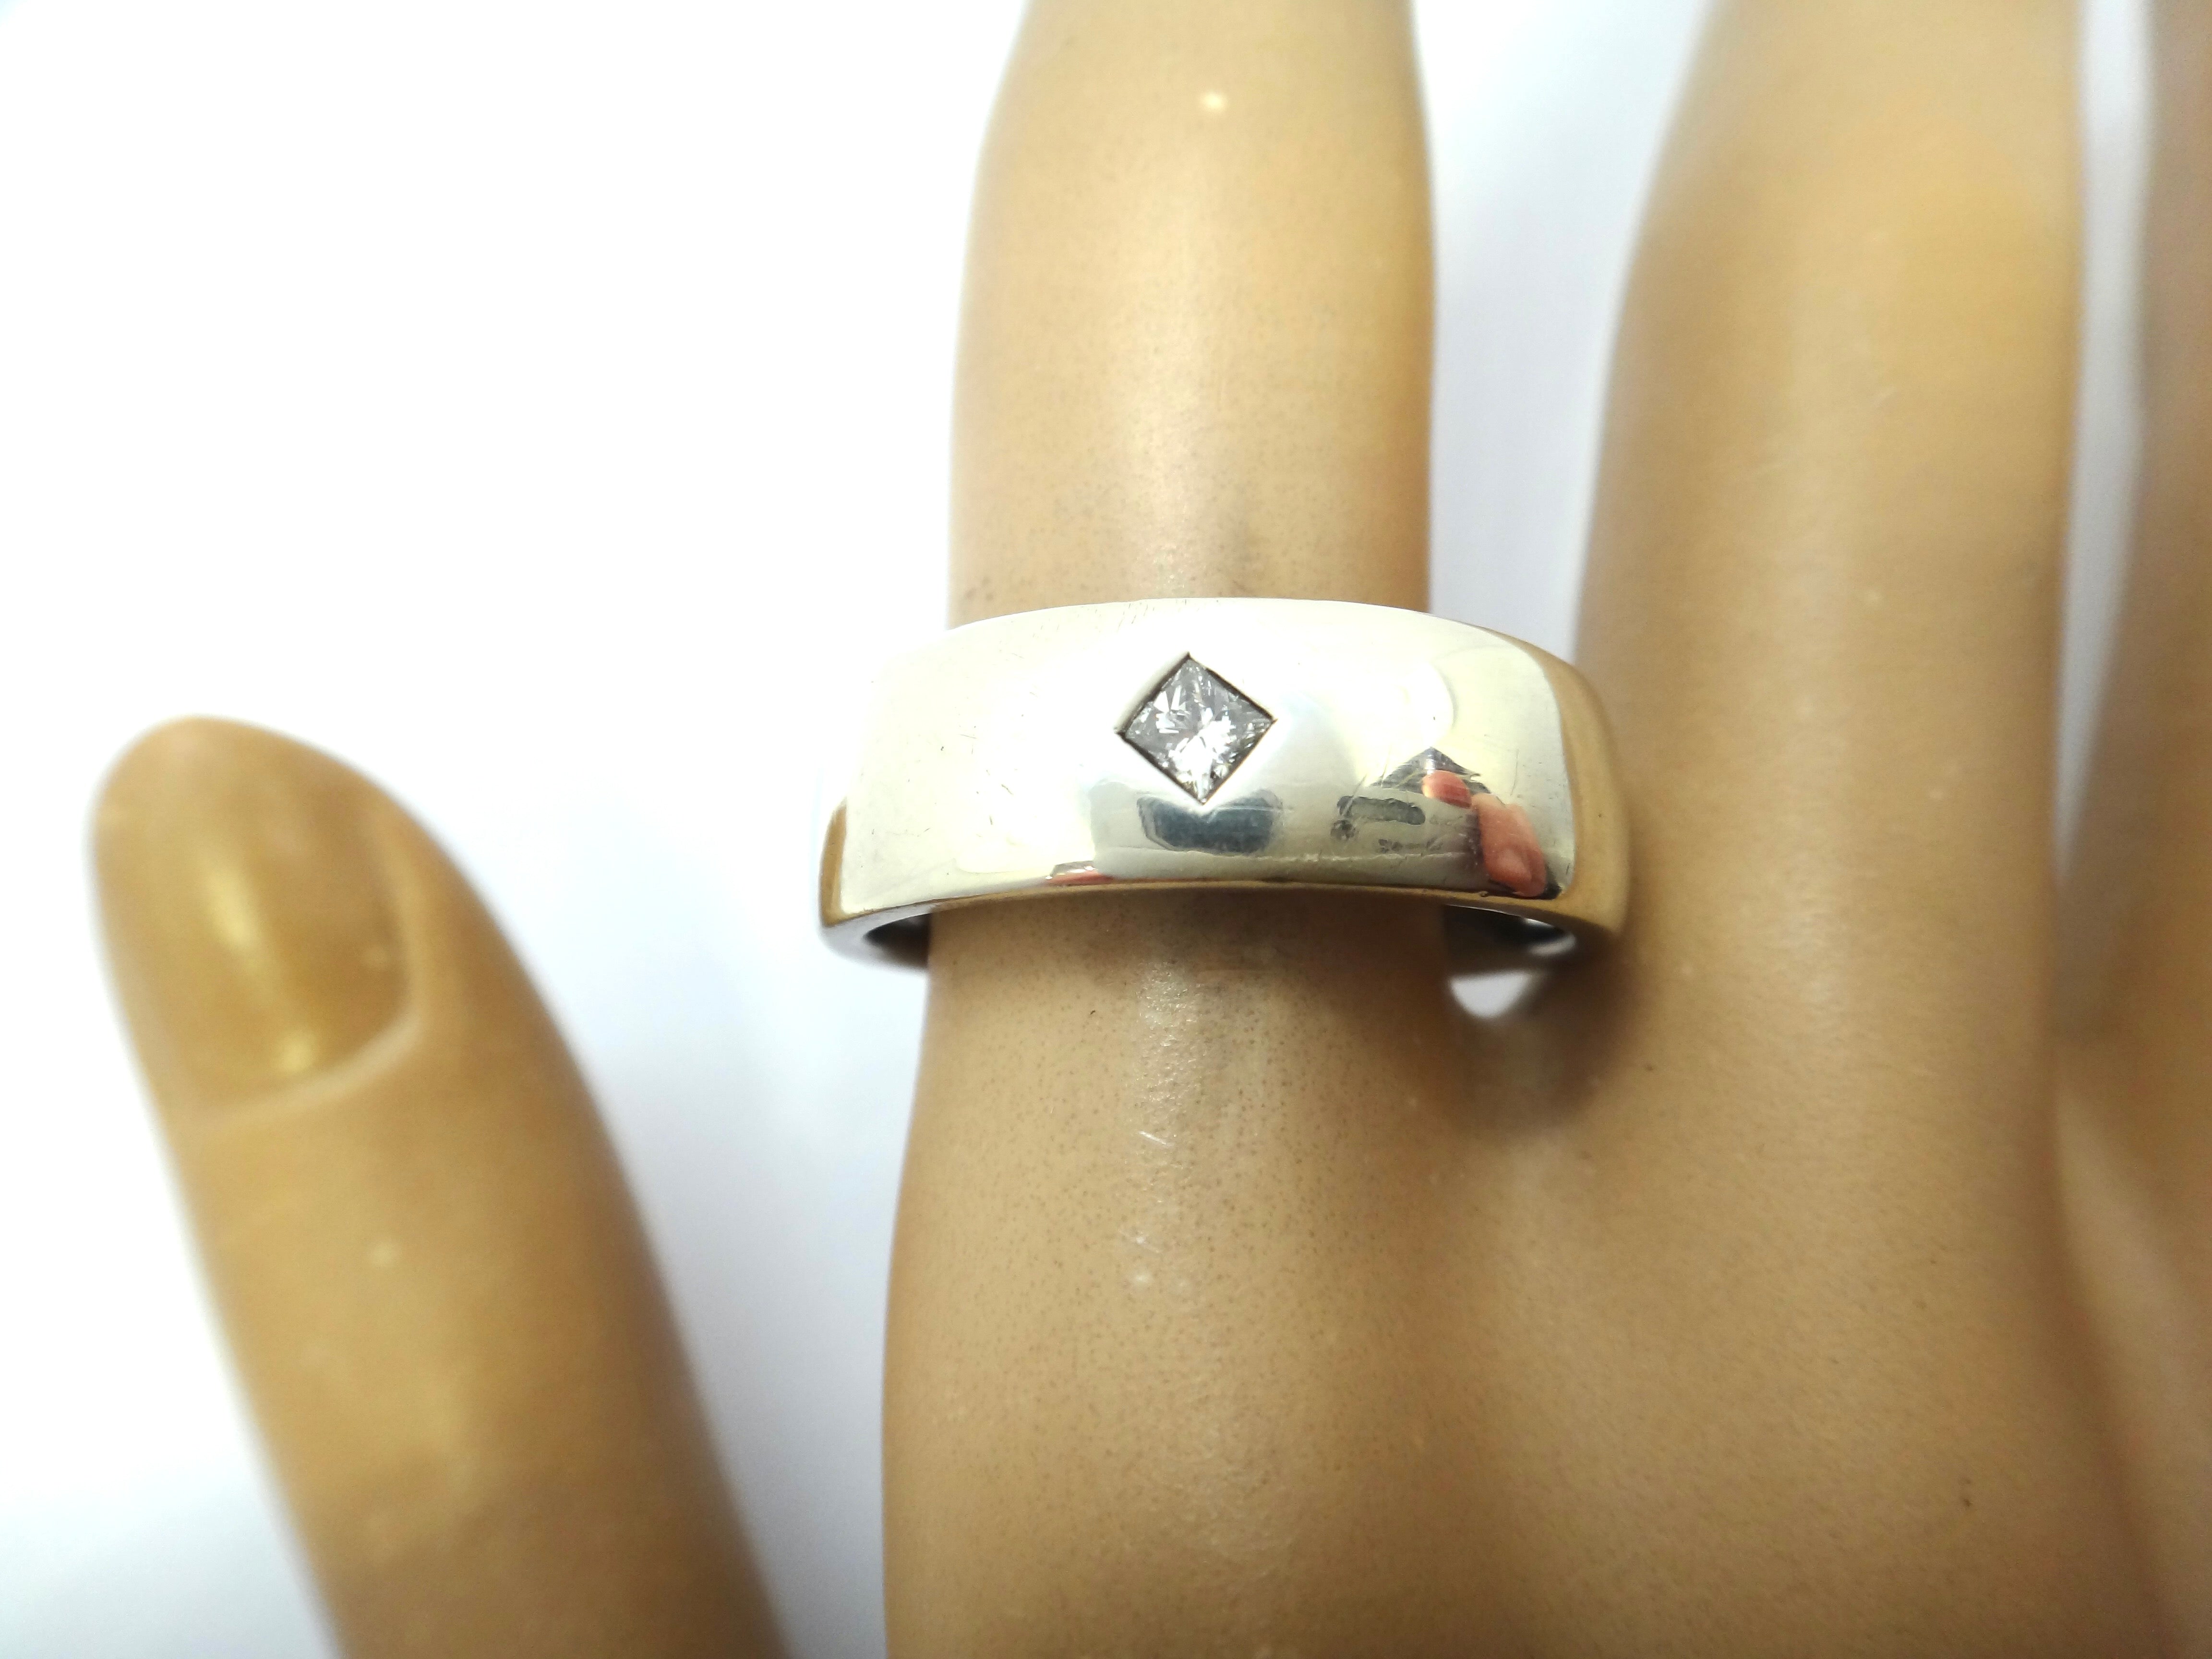 9ct White GOLD & Princess Cut Diamond Band Ring